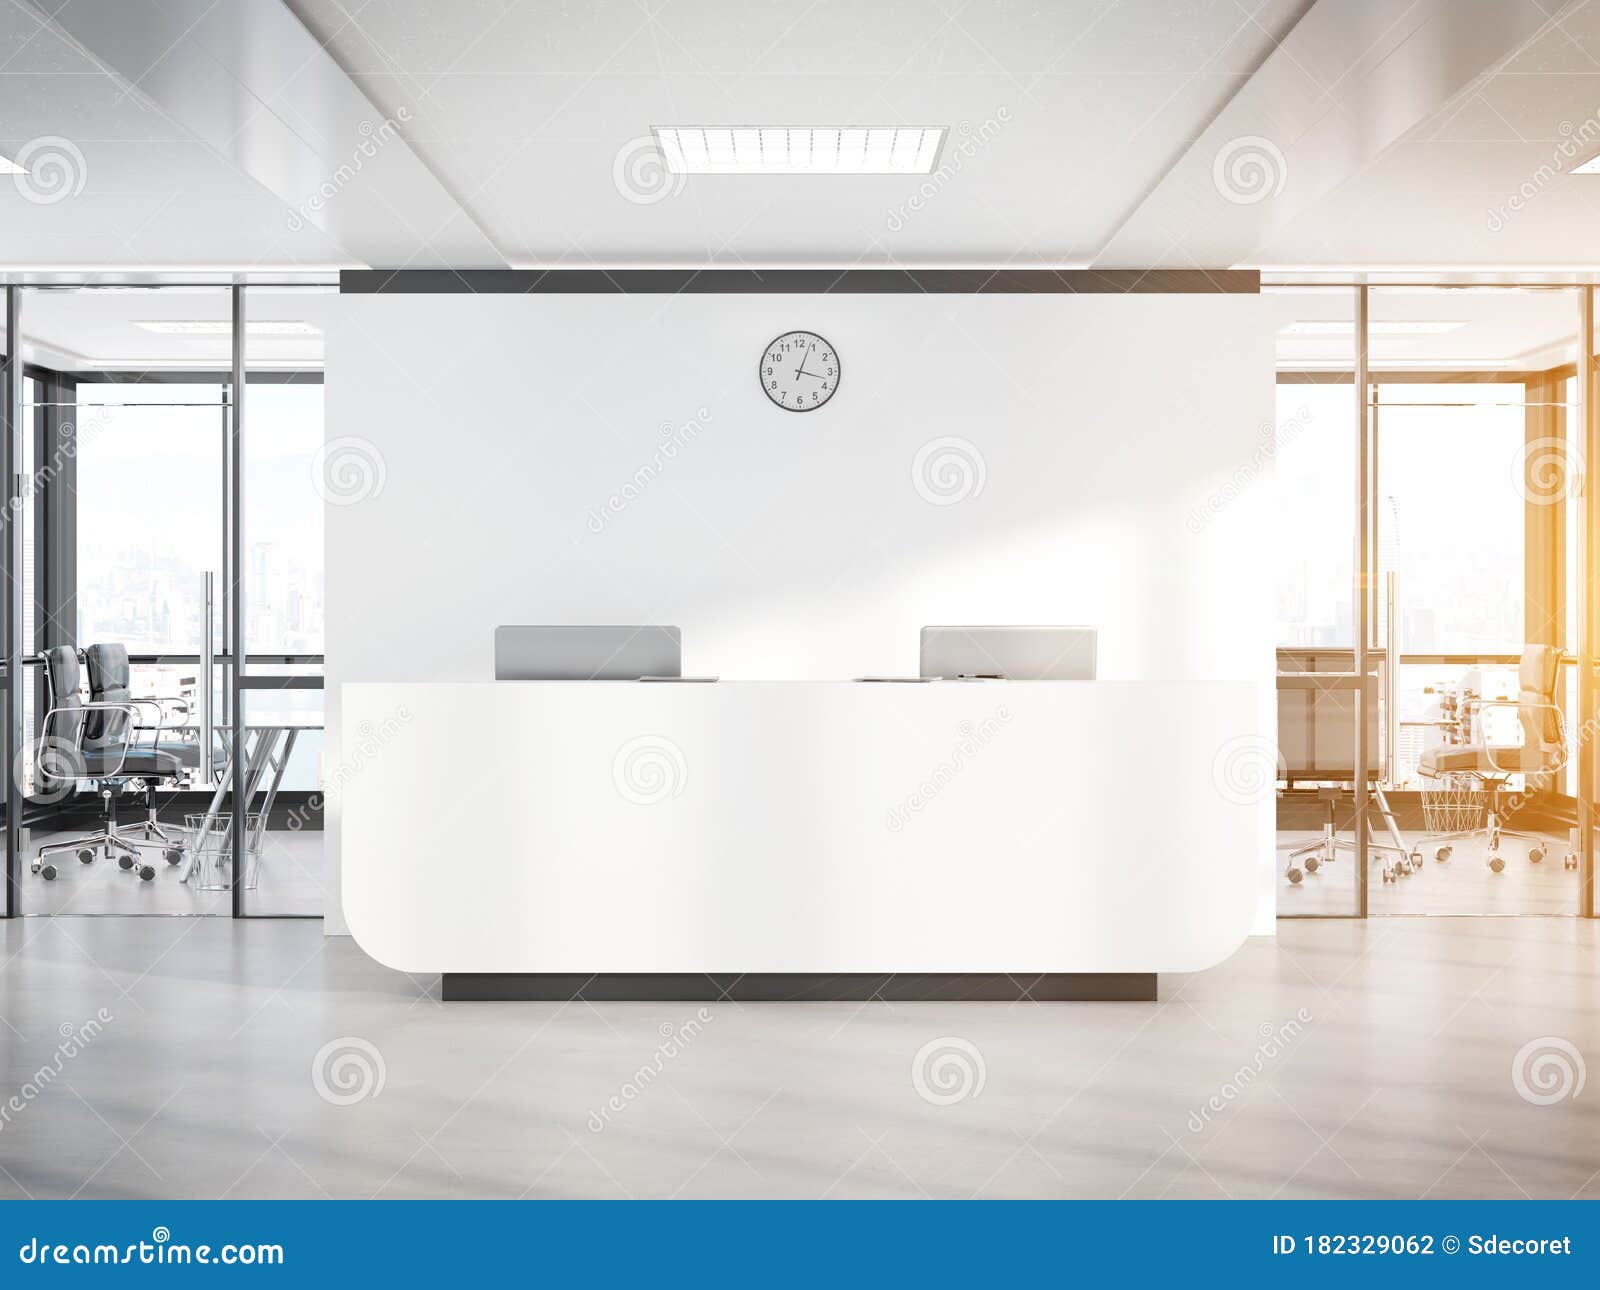 Download Blank White Reception Desk In Concrete Office With Large Windows Mockup 3d Rendering Stock Illustration Illustration Of Logo Background 182329062